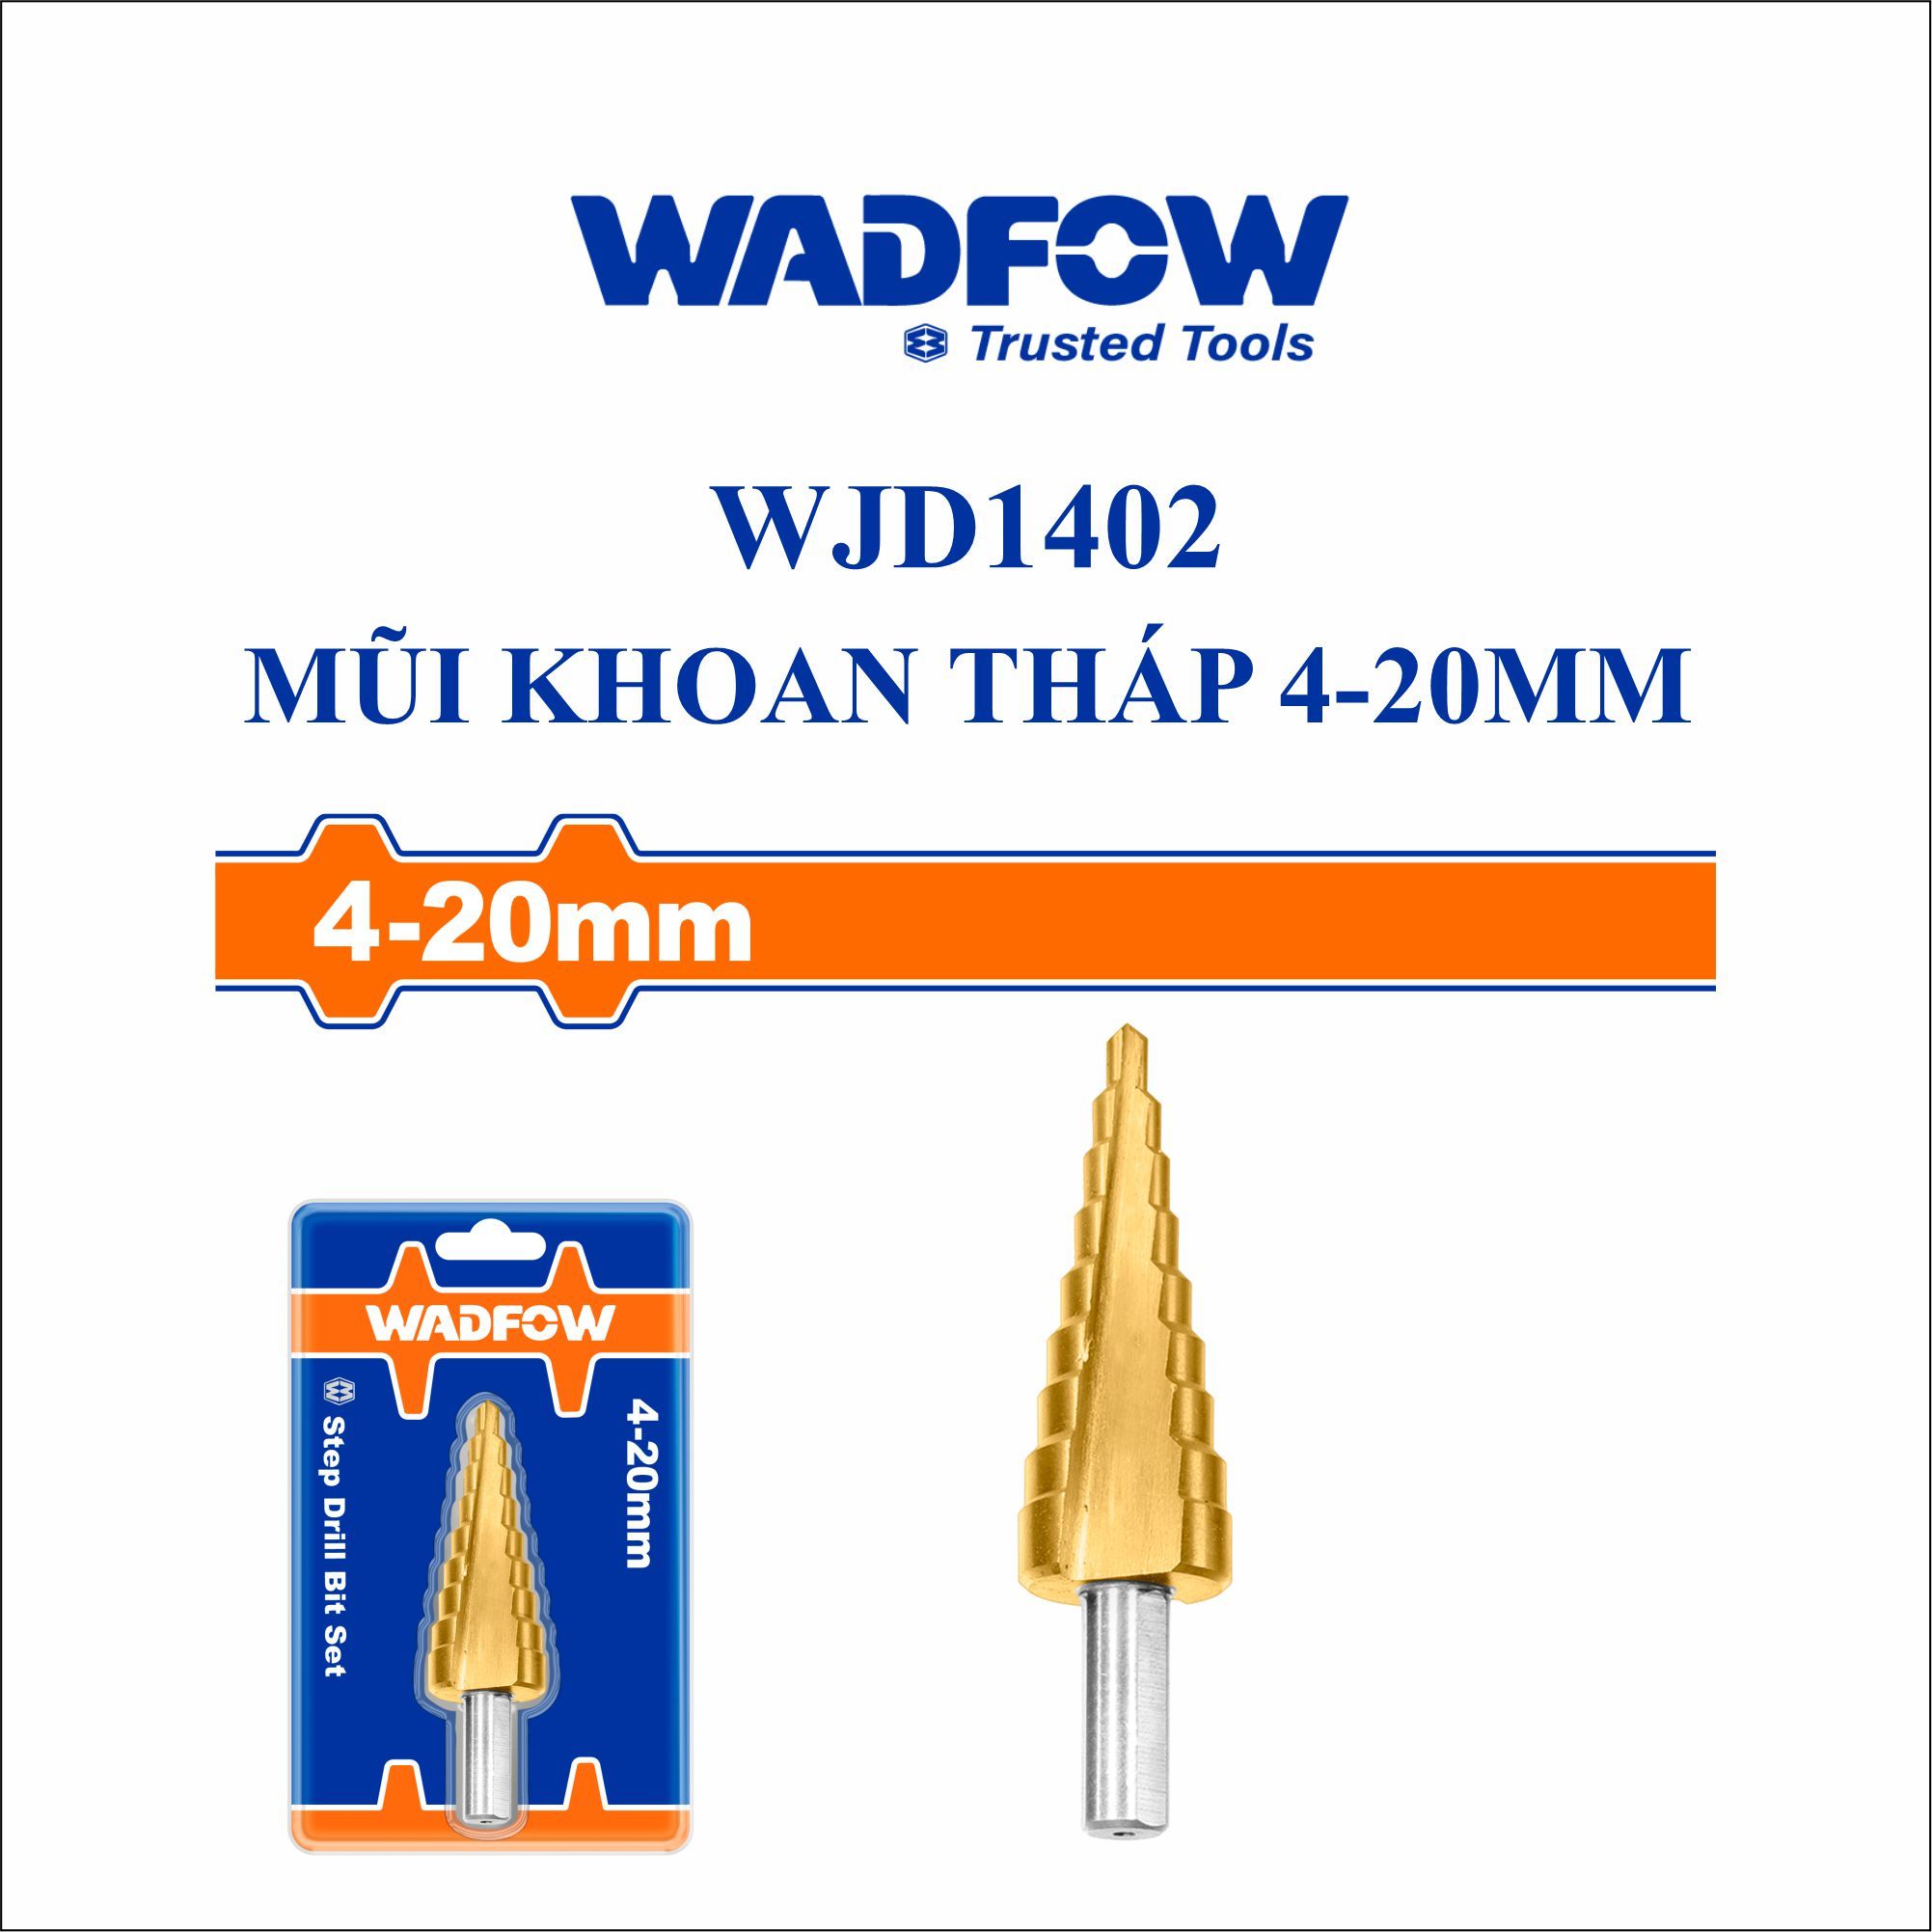  Mũi khoan tháp 4-20mm WADFOW WJD1402 